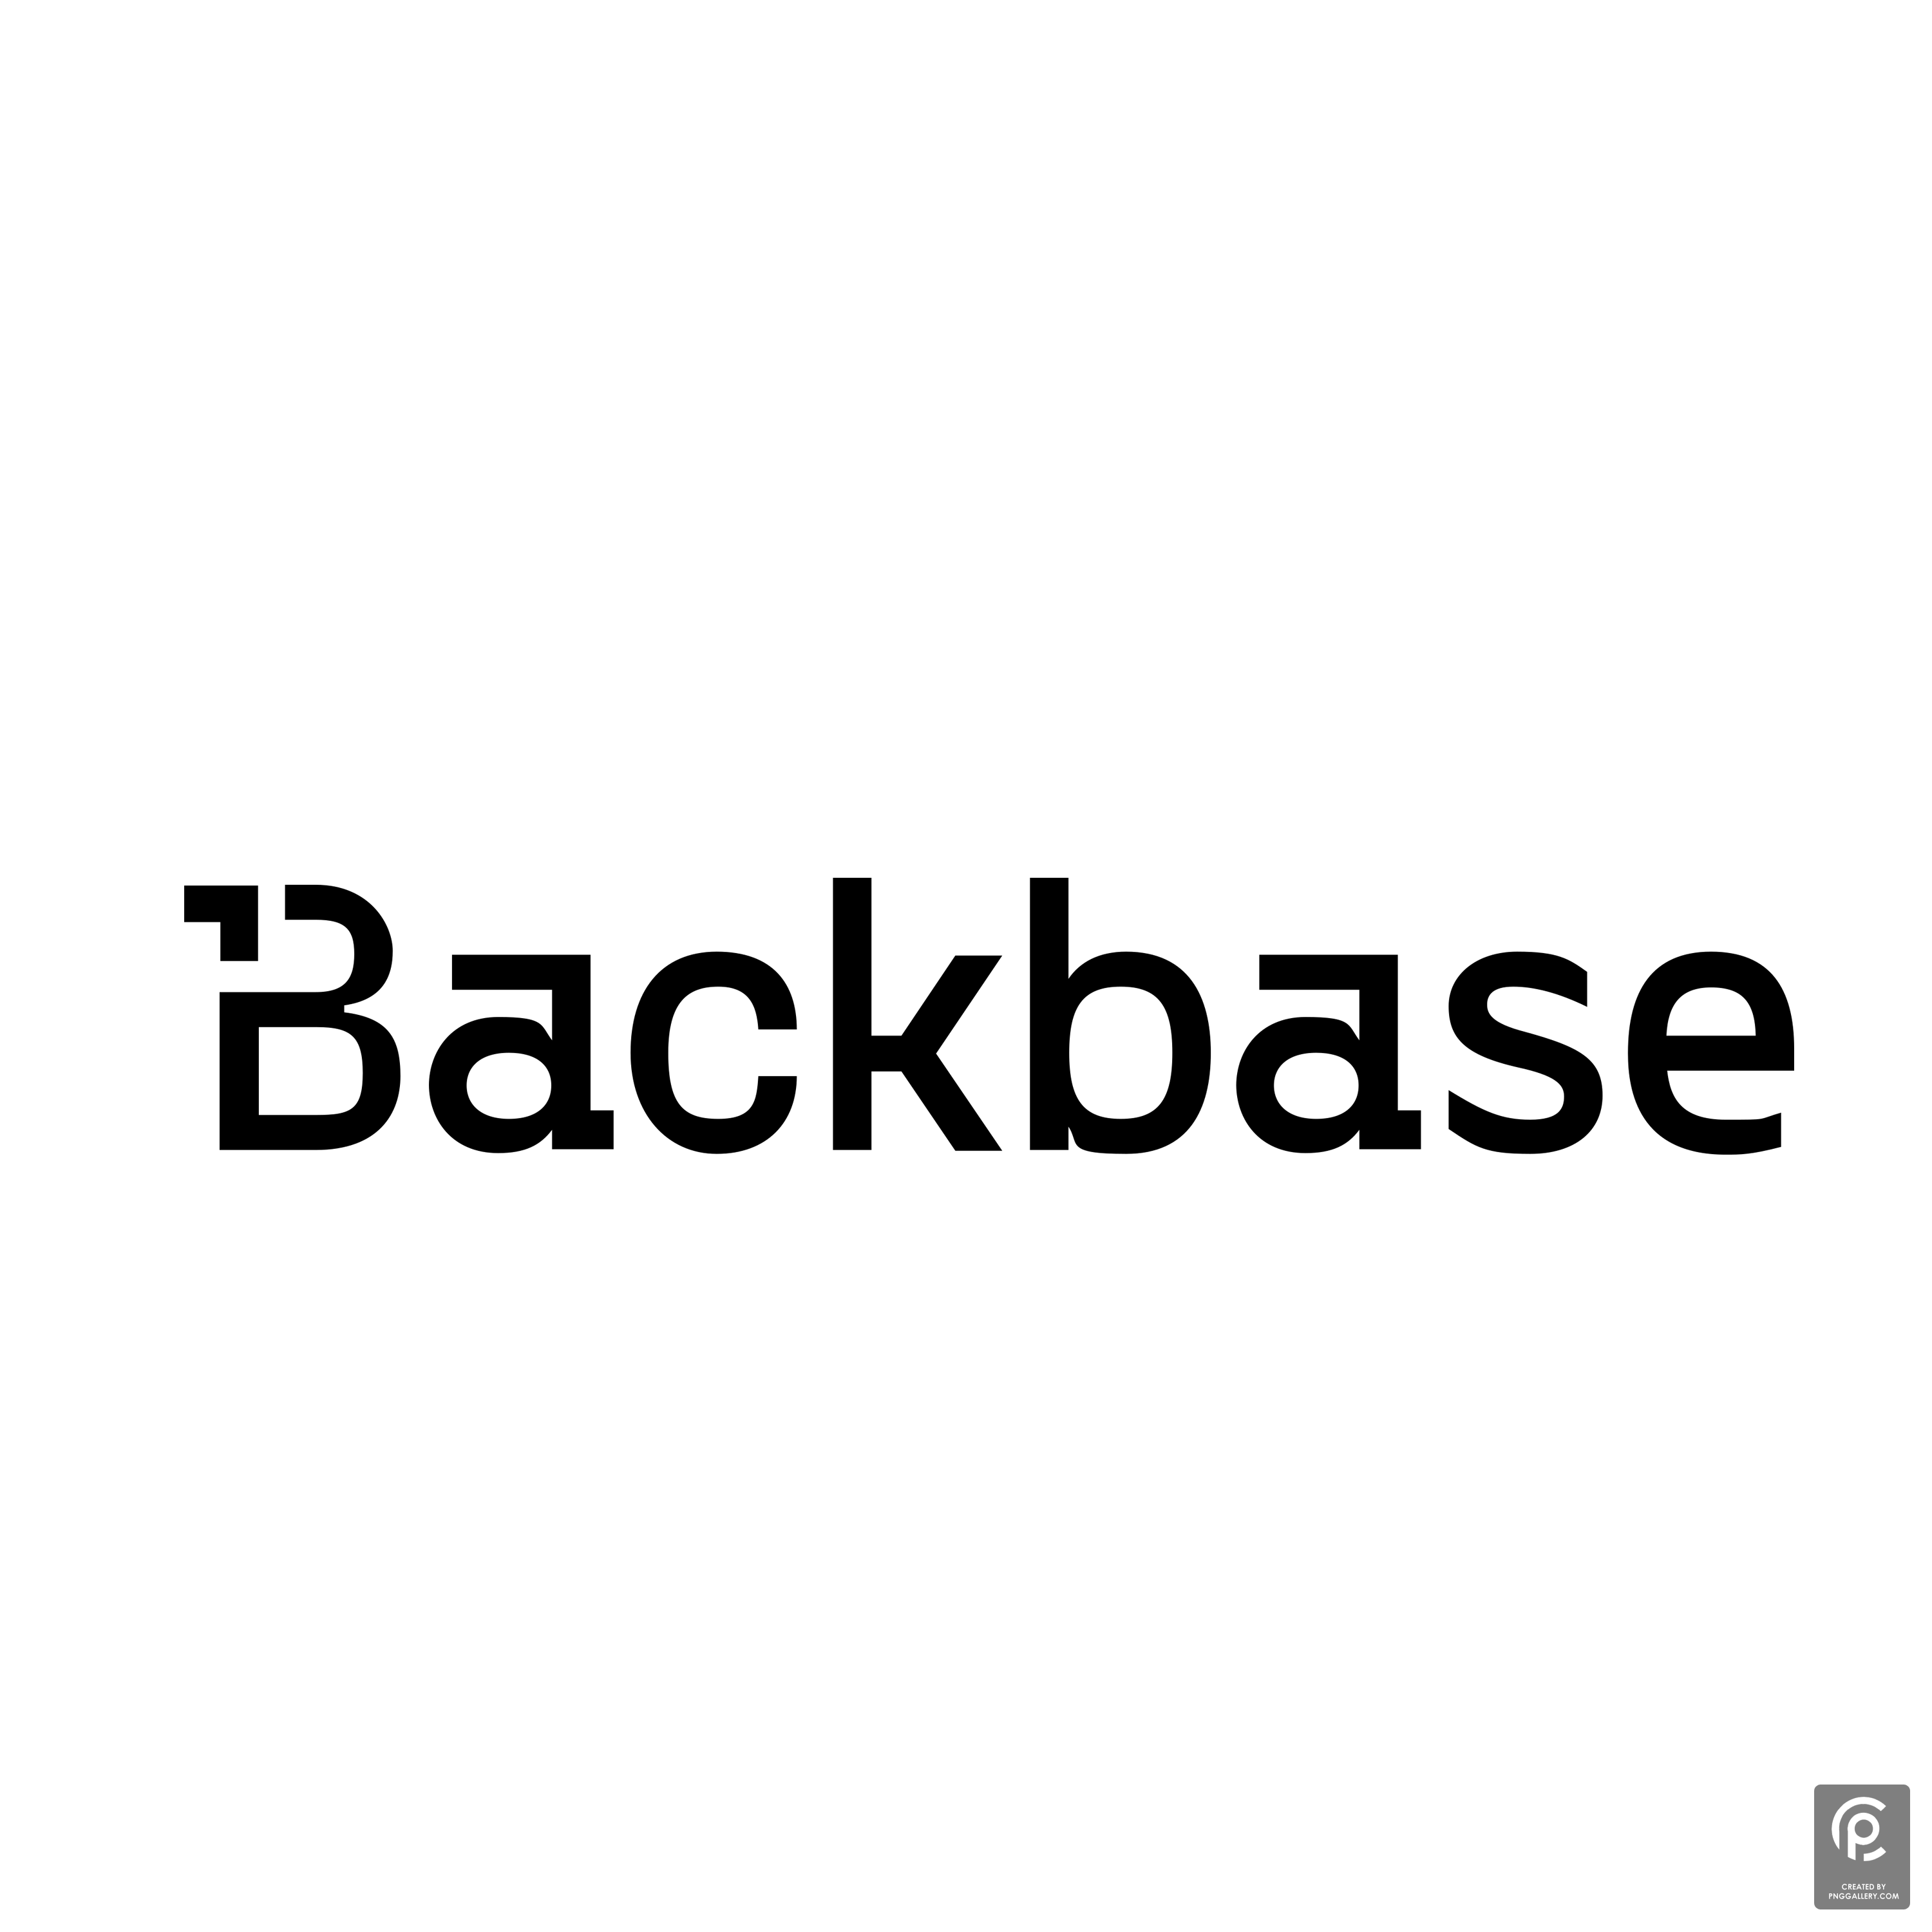 Backbase Logo Transparent Gallery